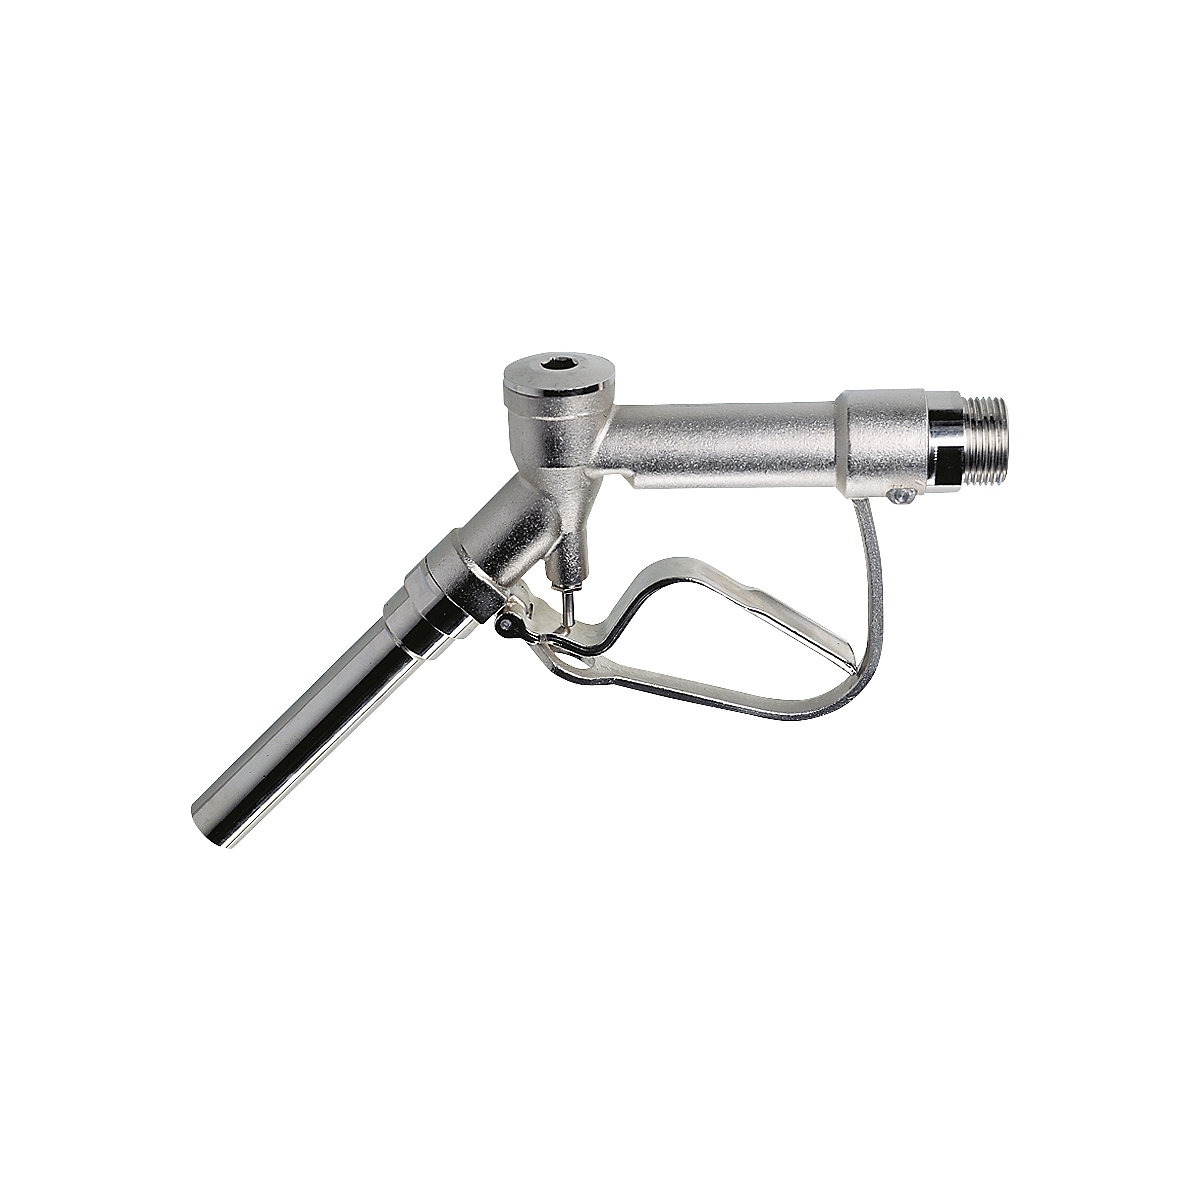 Manual pump pistol, nickel plated brass – Jessberger